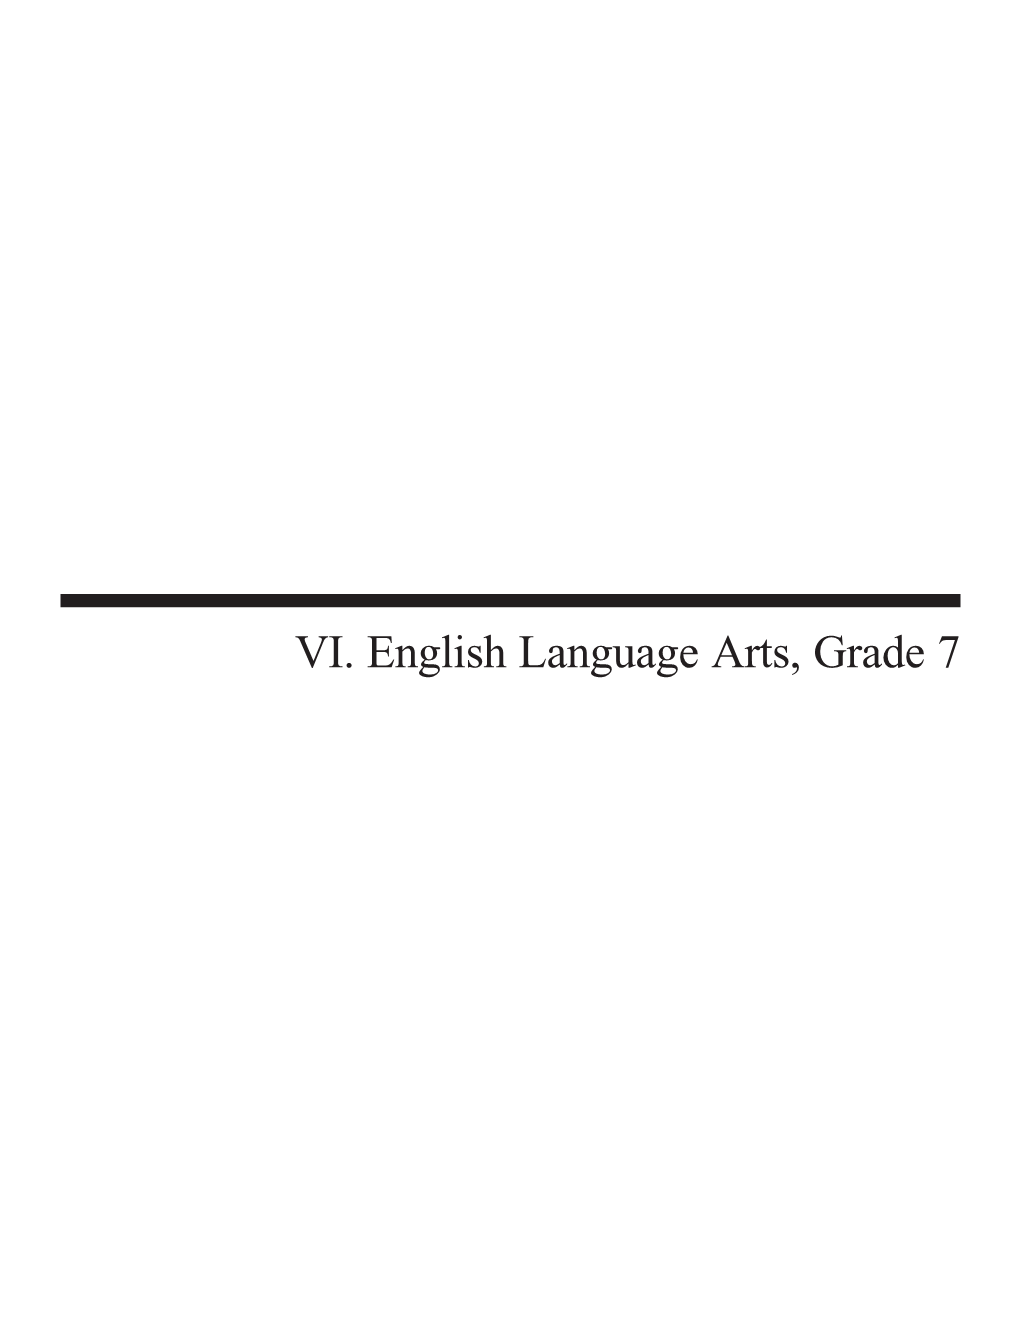 MCAS 2018 English Language Arts, Grade 7 Released Items